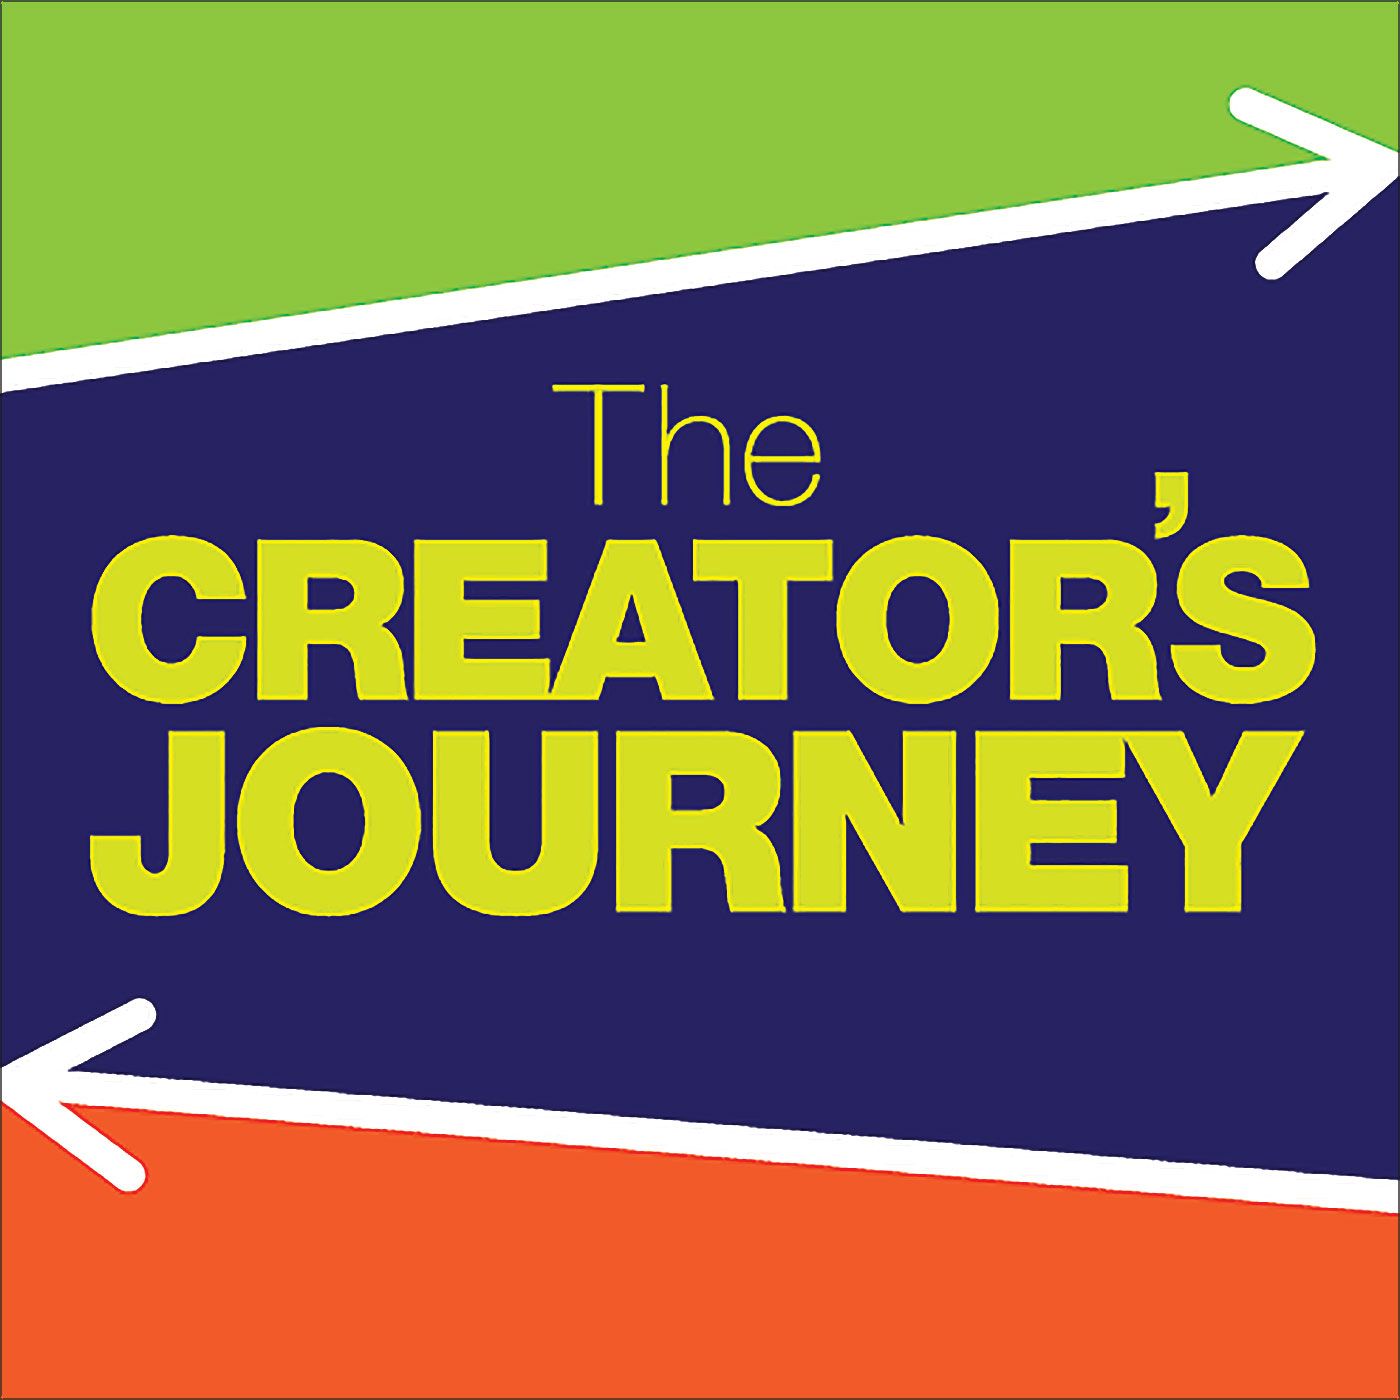 The Creator's Journey tracks